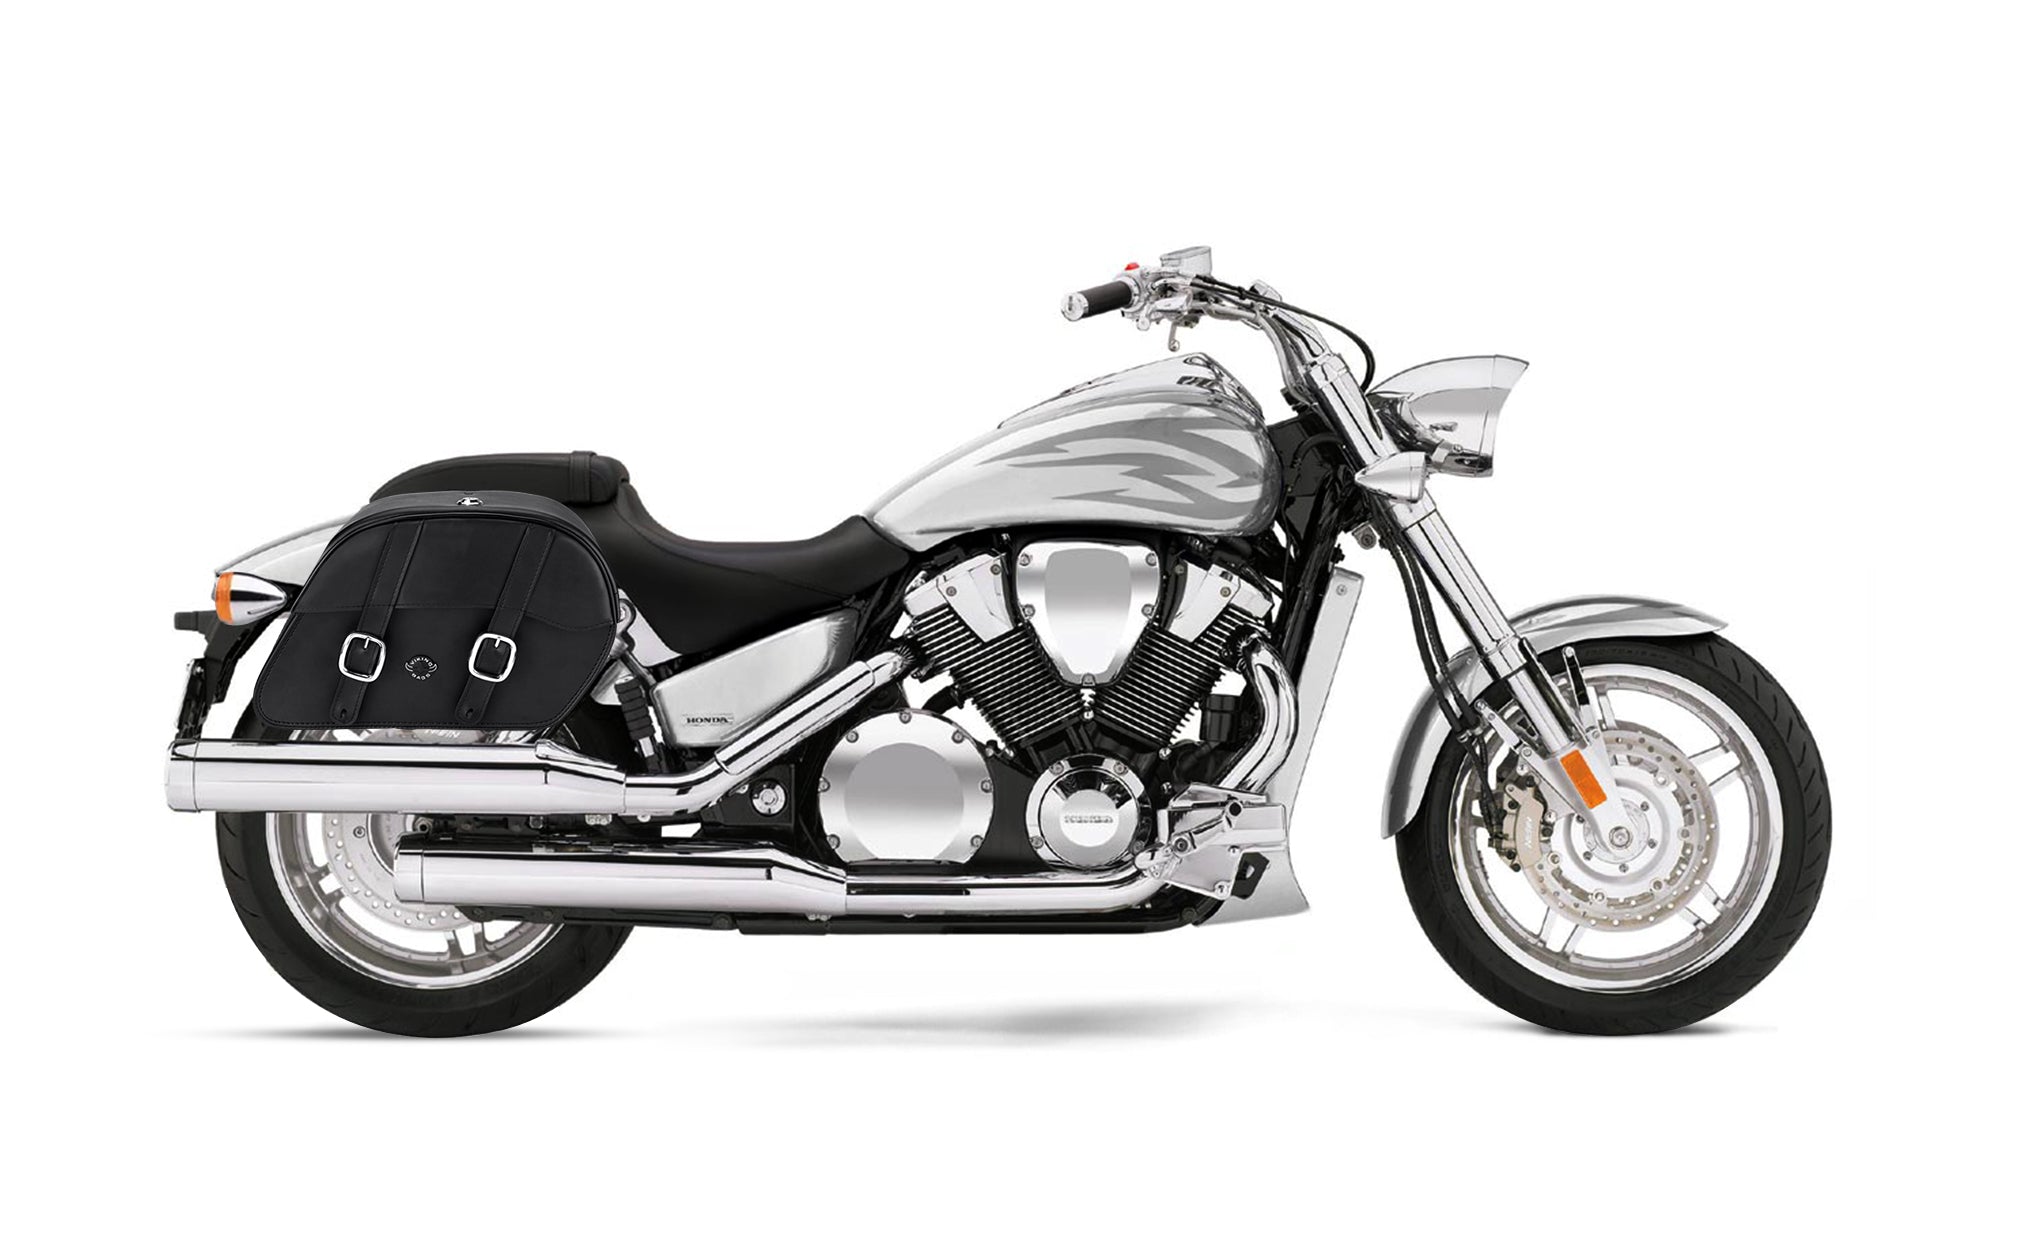 Viking Skarner Large Honda Vtx 1800 F Shock Cut Out Leather Motorcycle Saddlebags on Bike Photo @expand